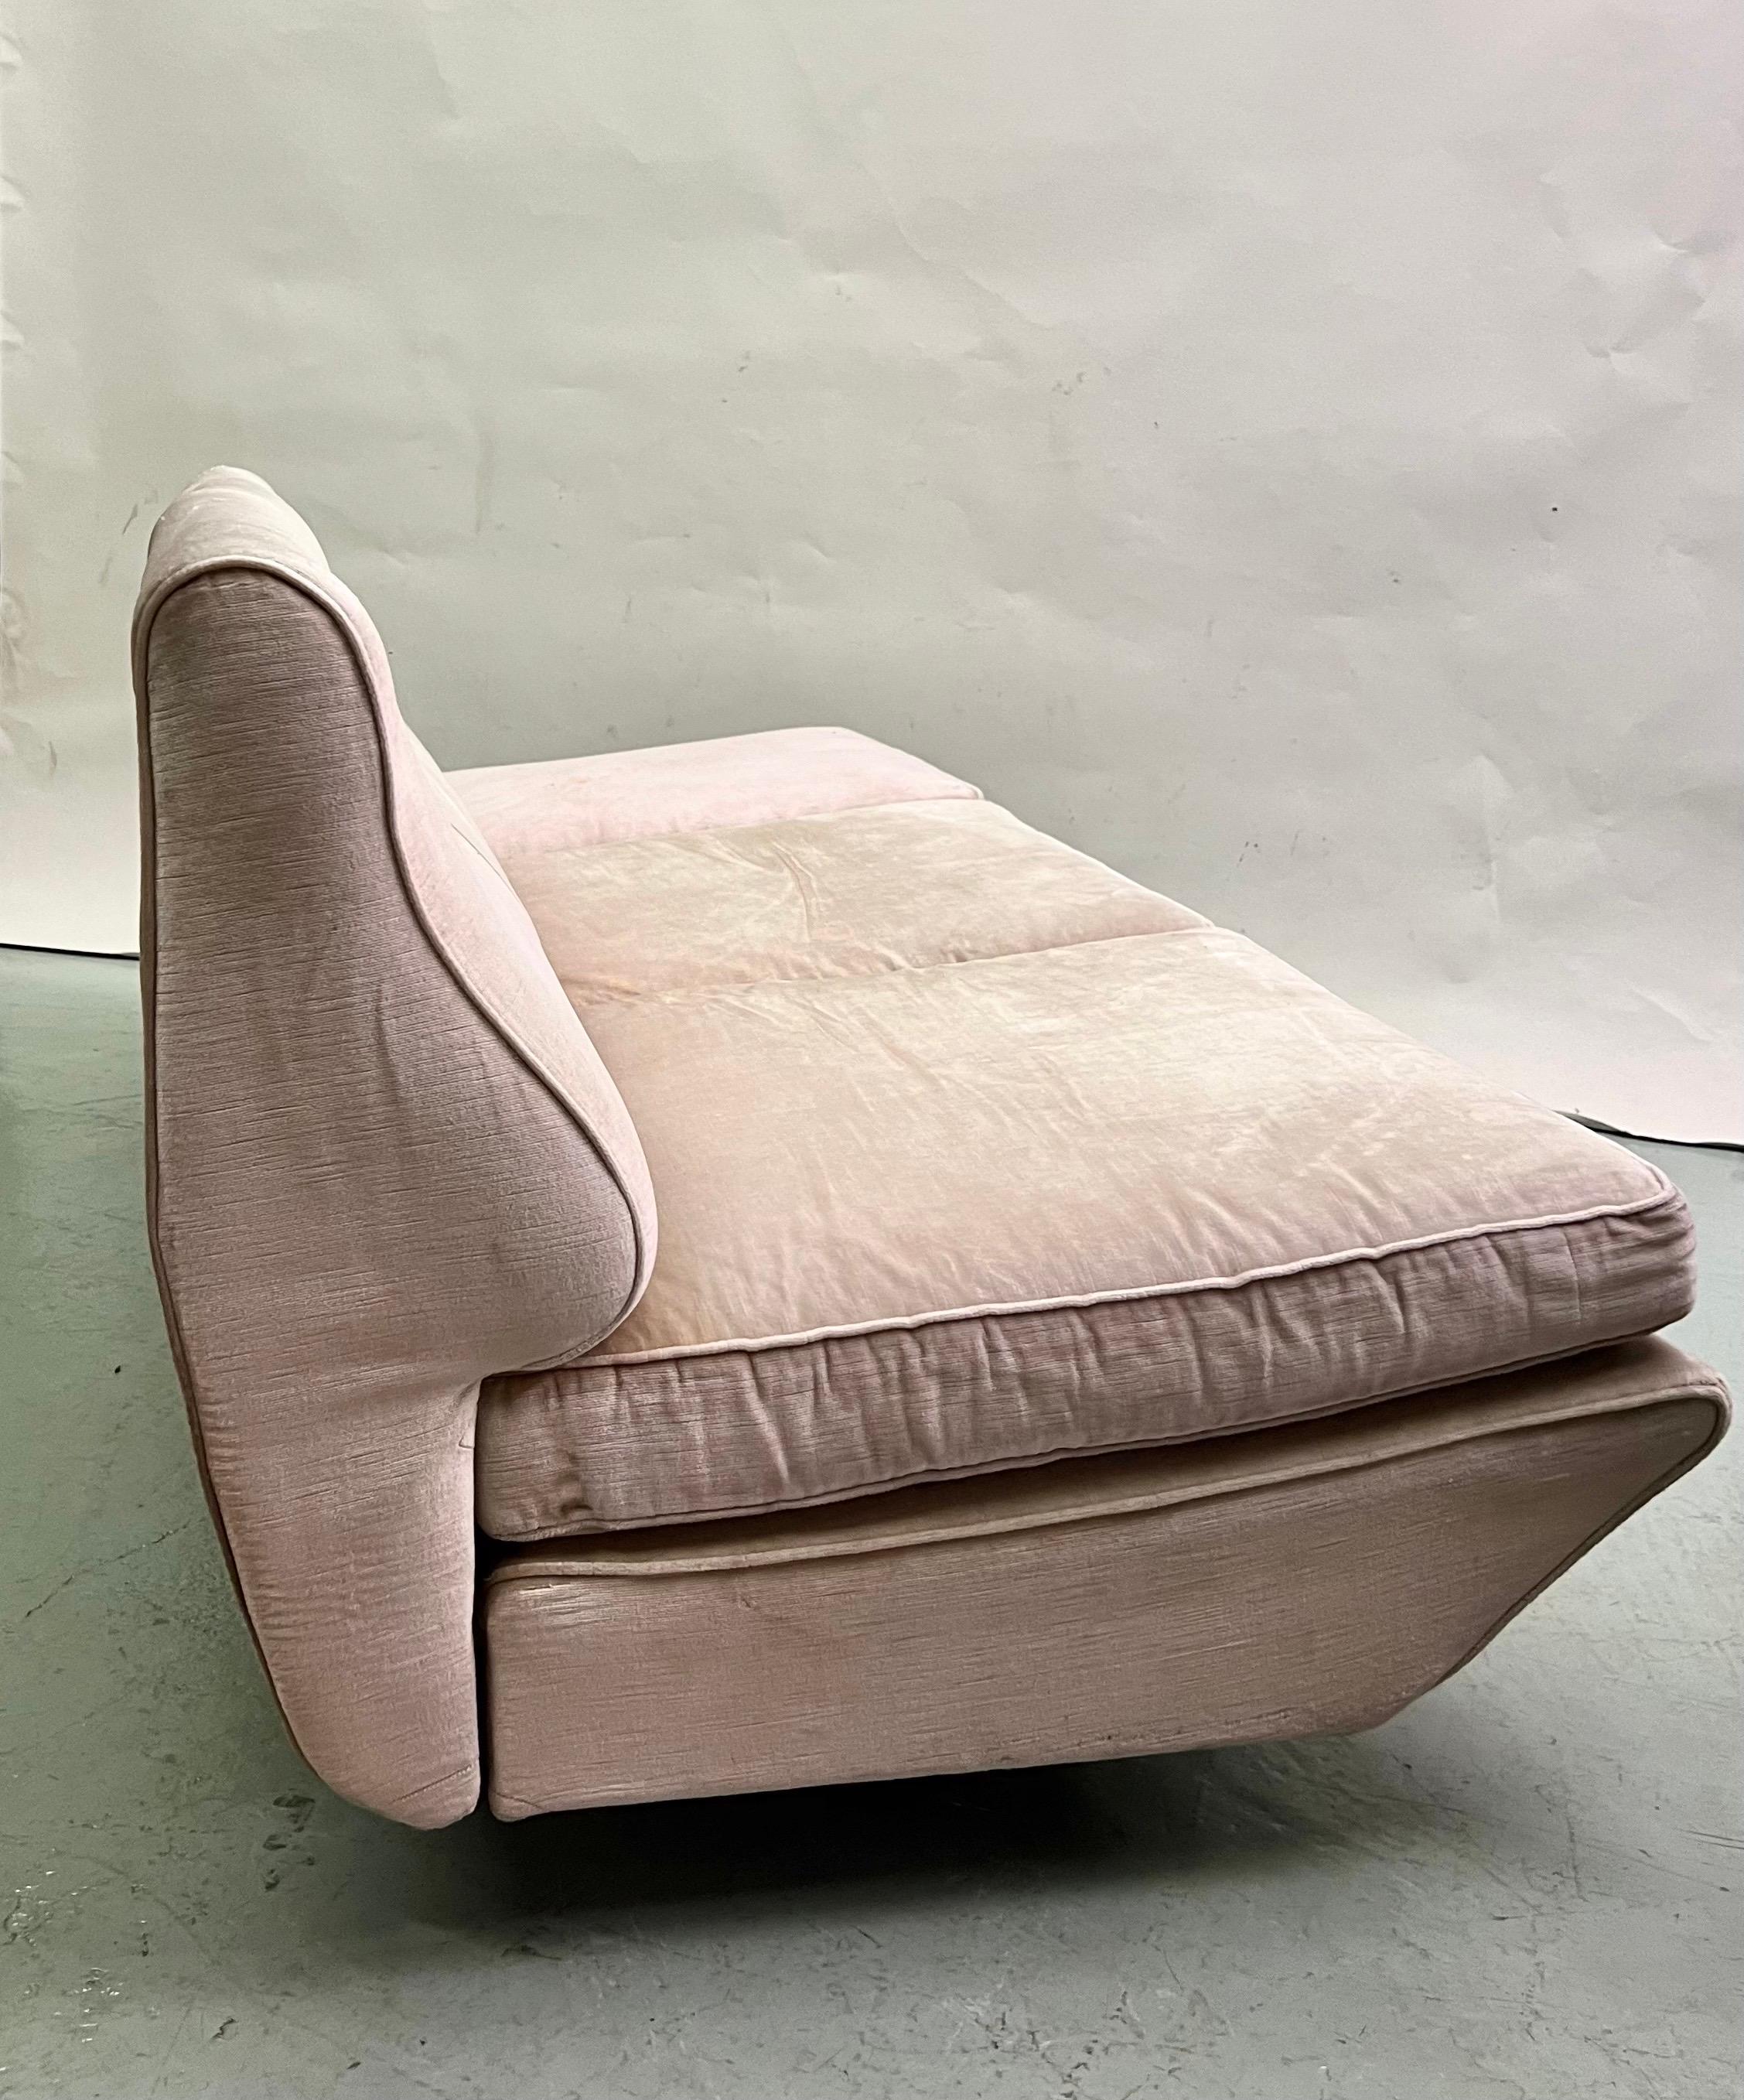 Italian Mid-Century Modern Triennale Sofa by Marco Zanuso for Arflex circa 1951 For Sale 4